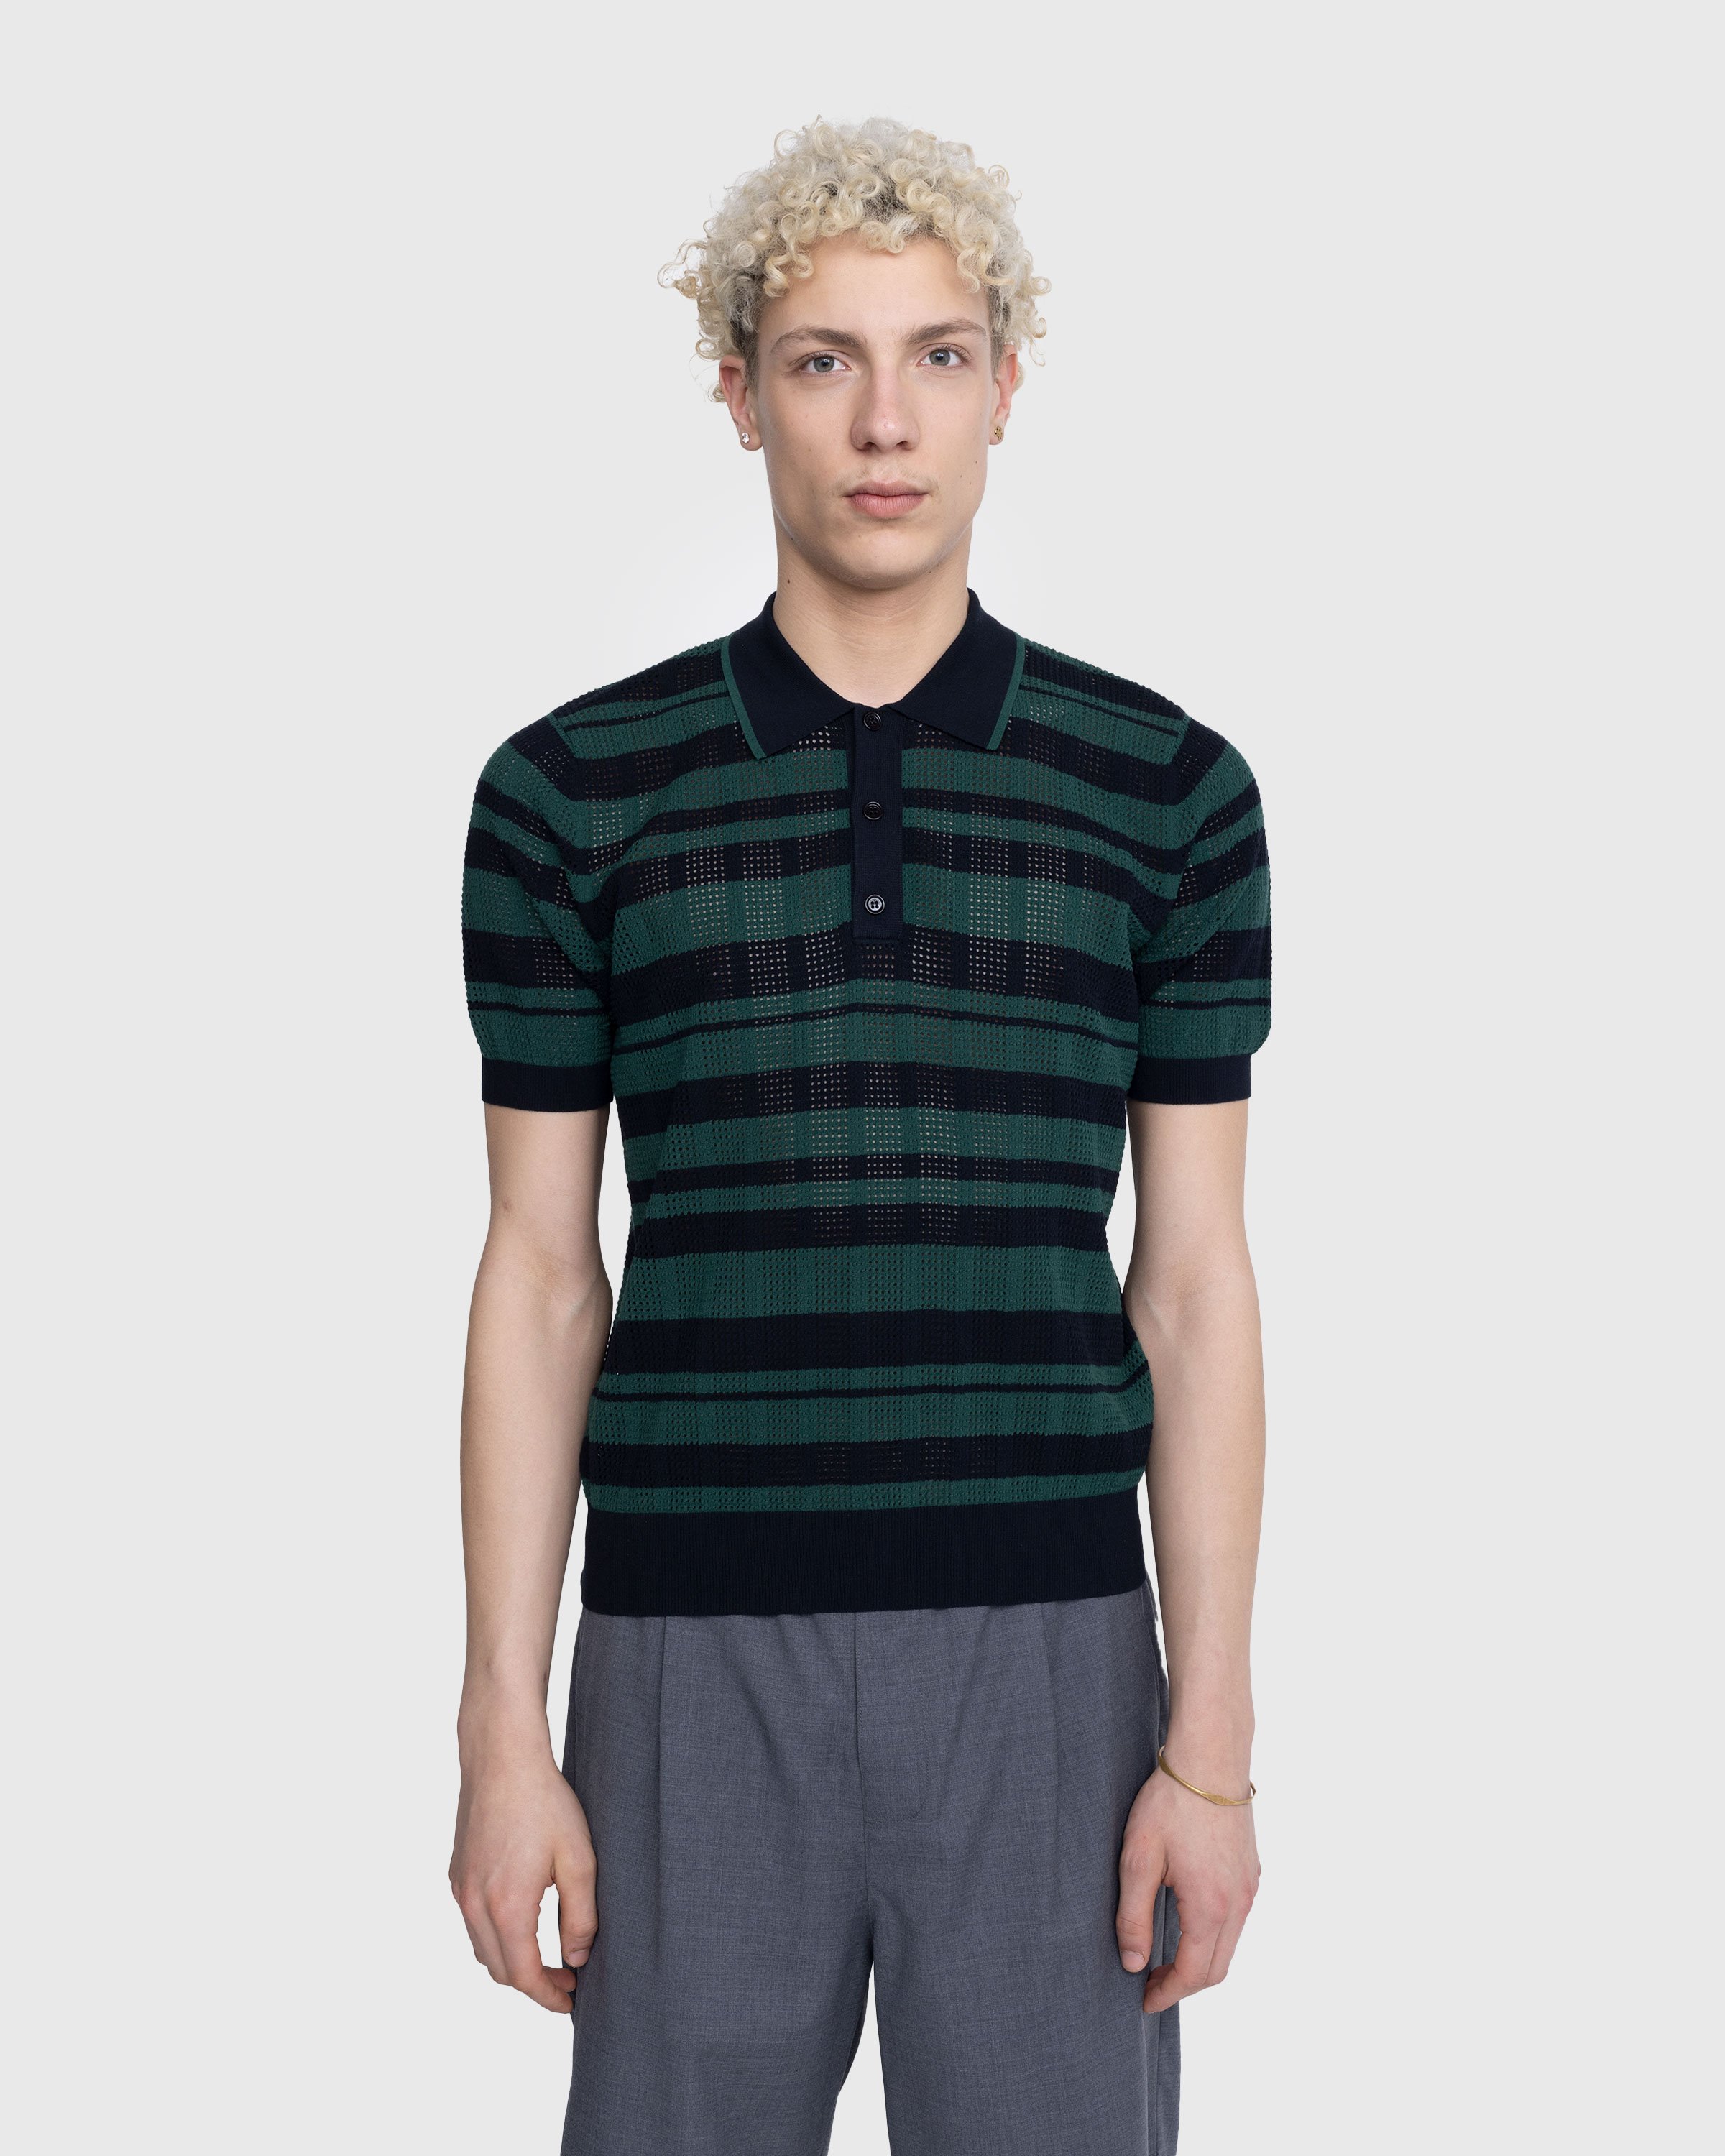 Dries van Noten - Mirko Striped Polo Shirt Black - Clothing - Black - Image 2